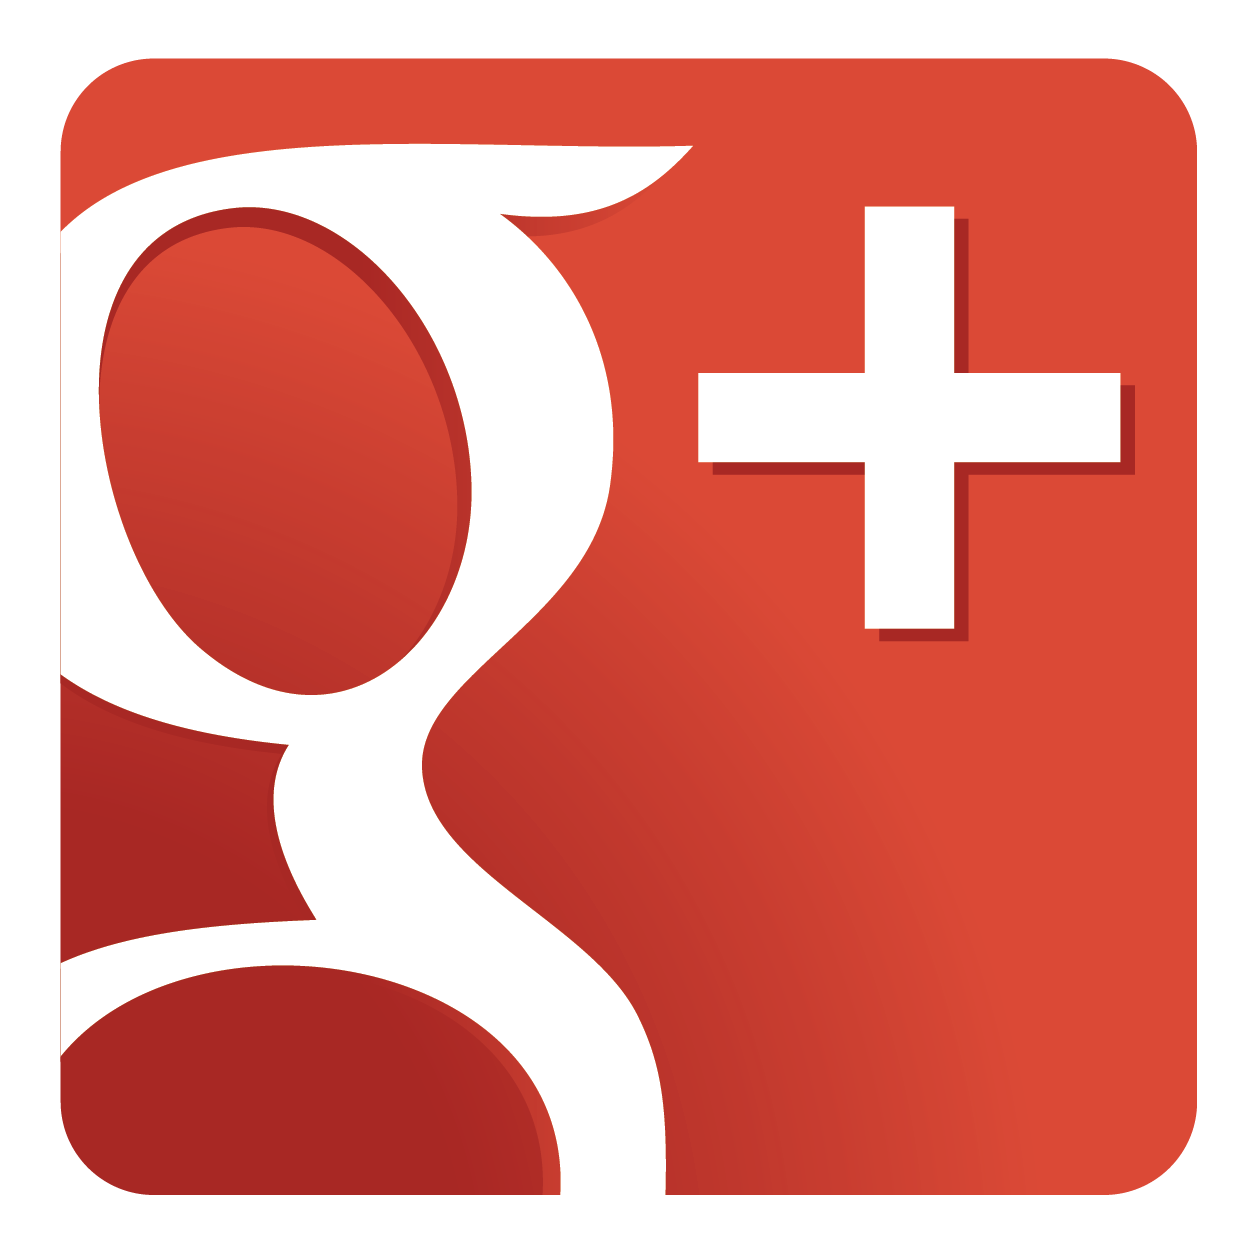 Google Plus Logo image #1255